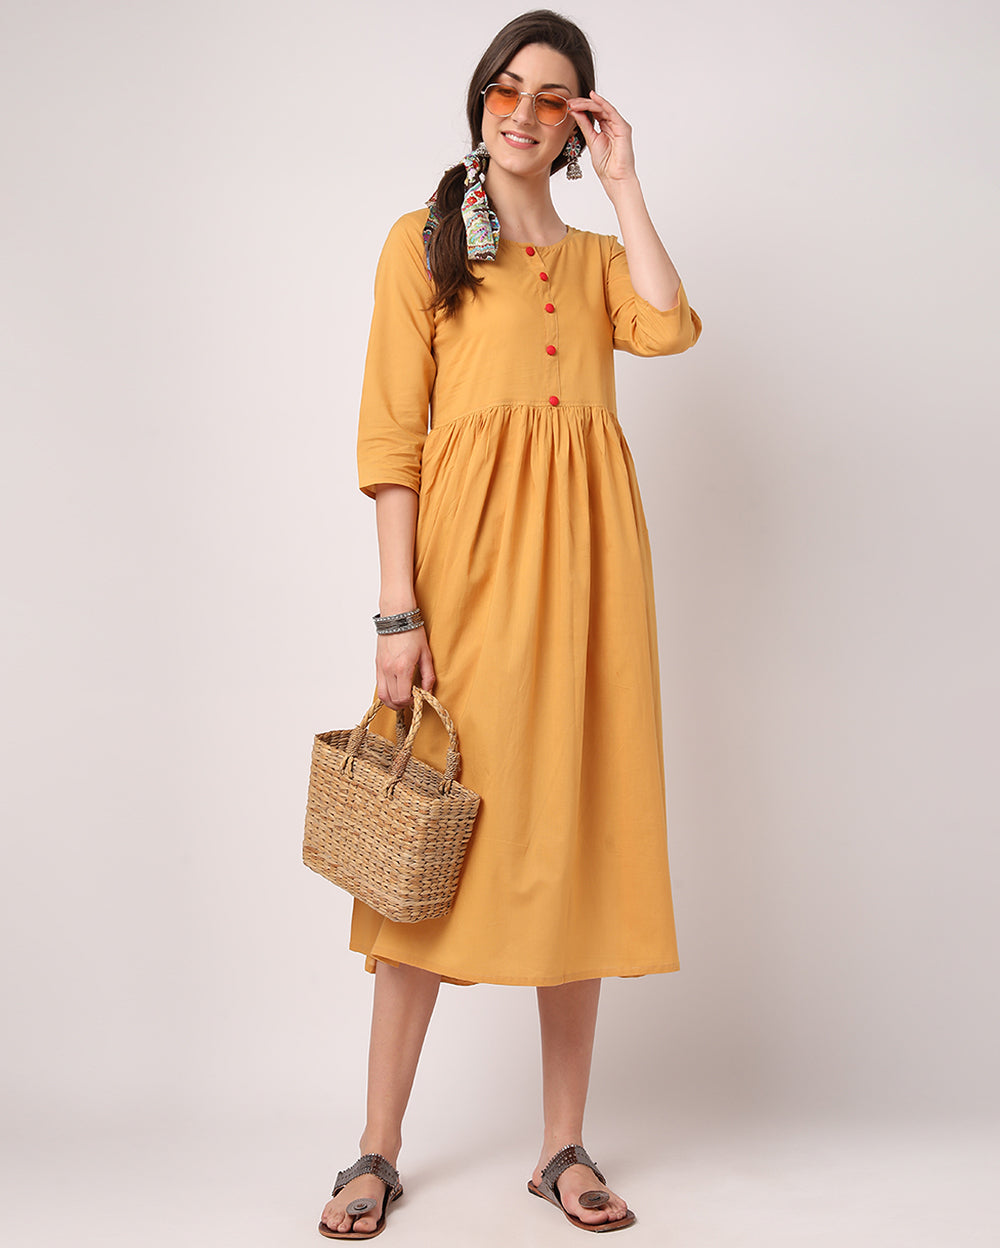 Solid Mustard Cotton Dress